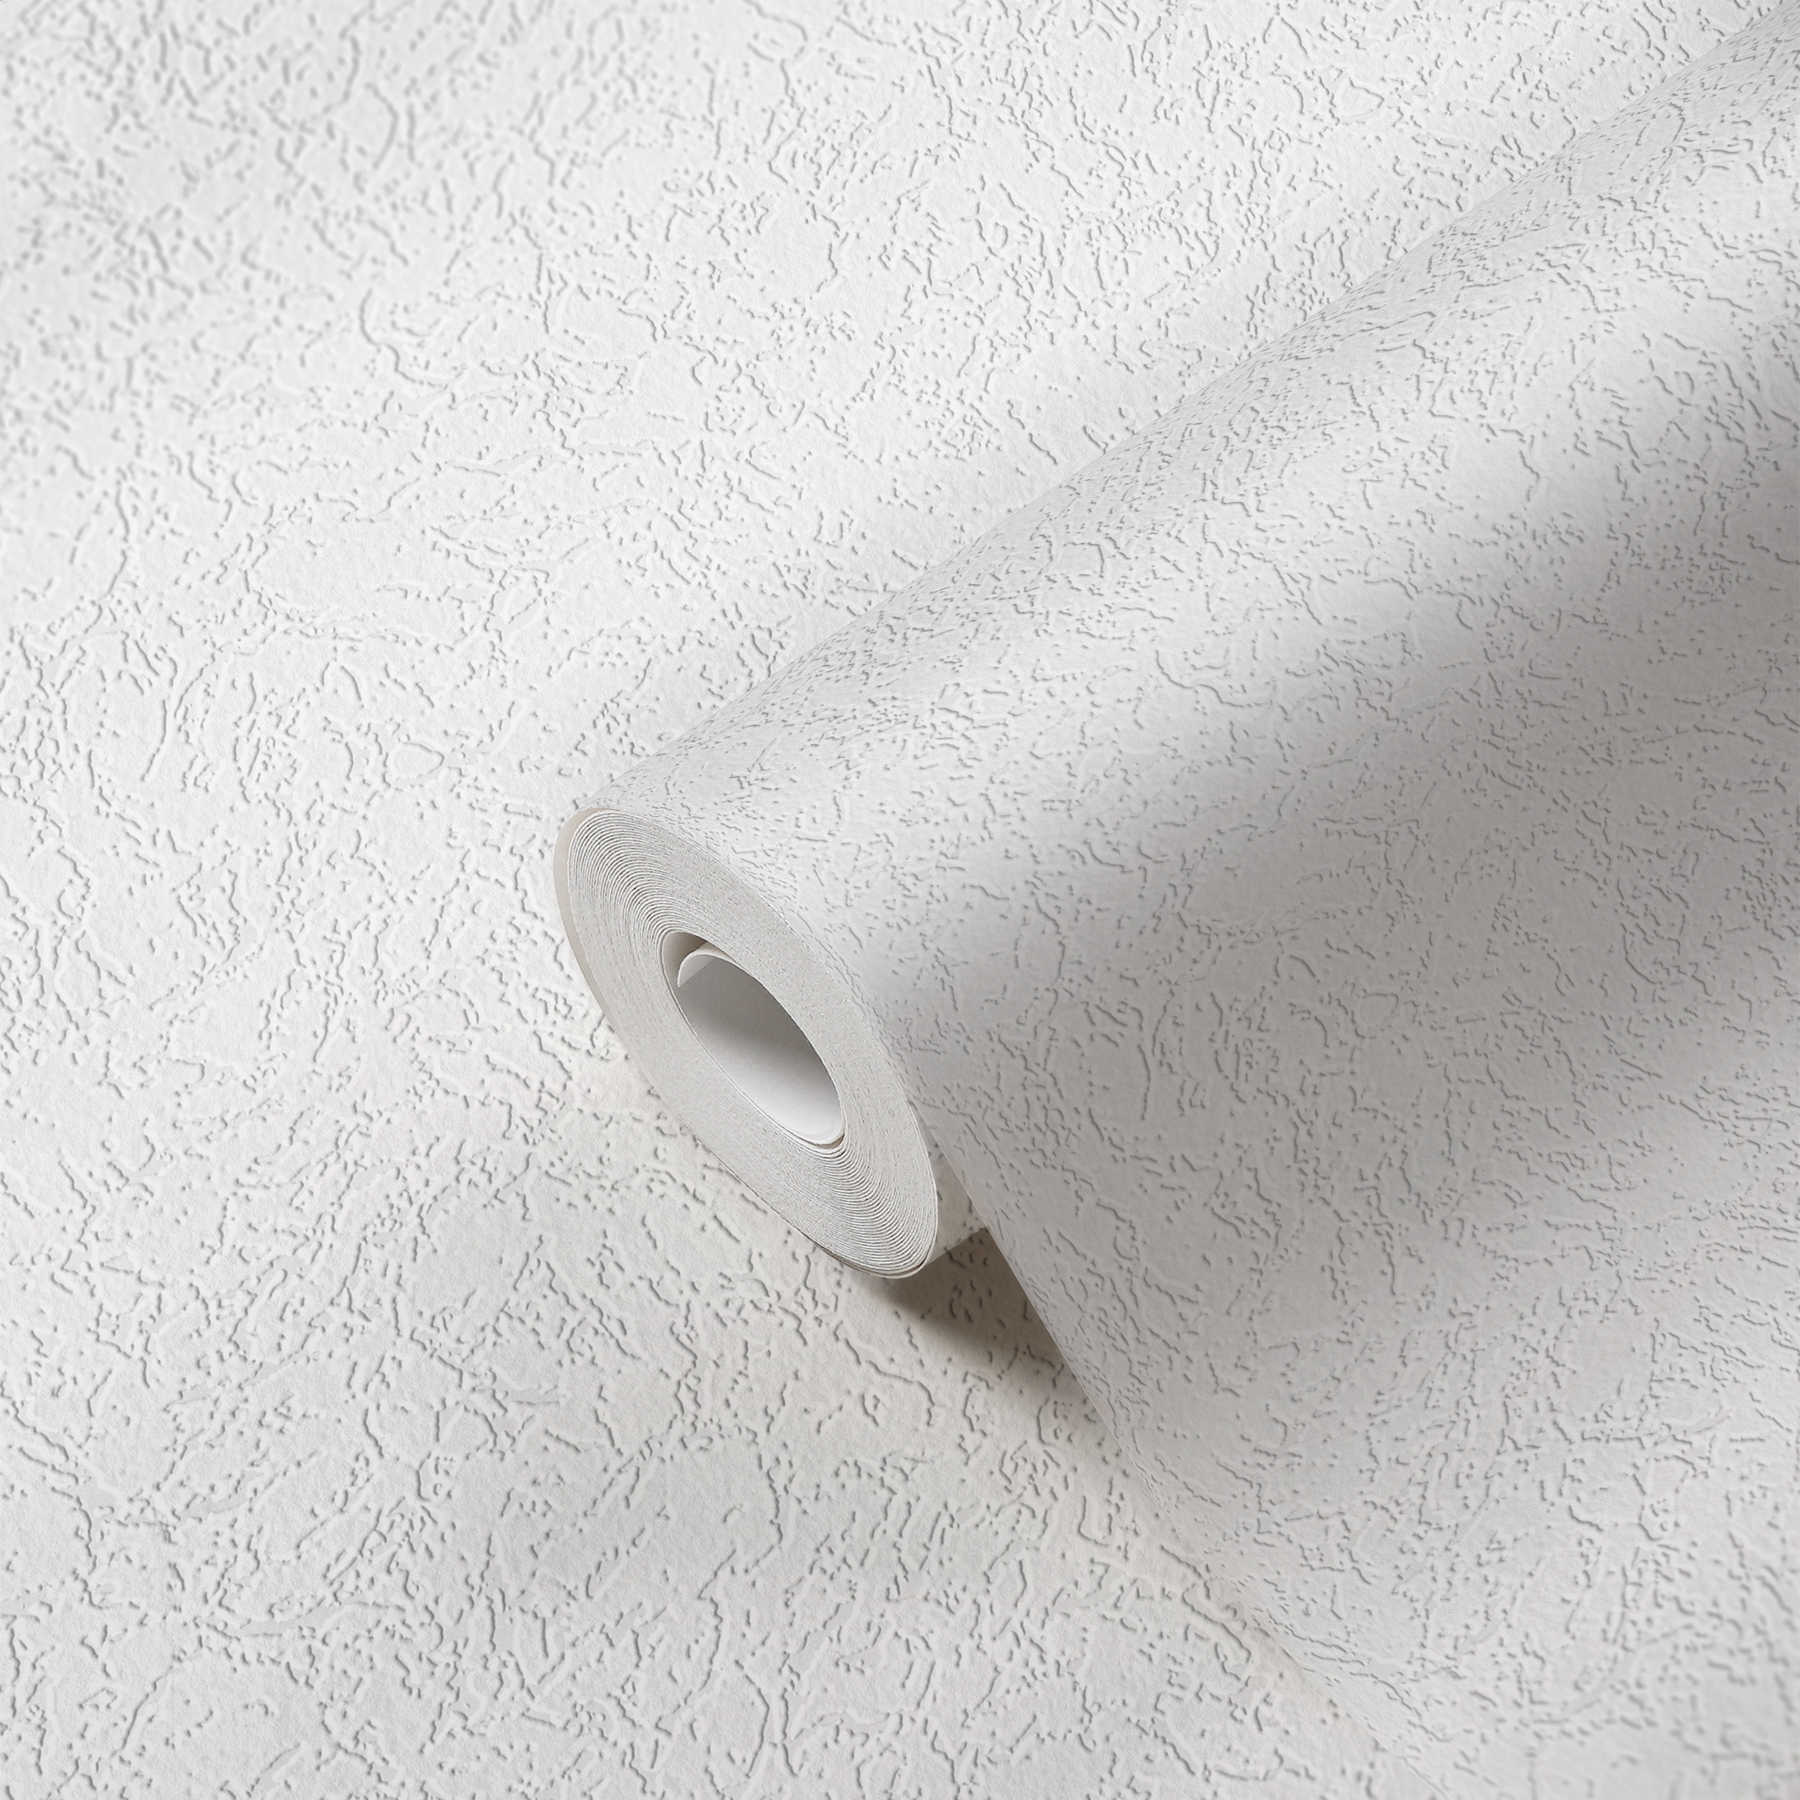             papel pintado roughcast opic blanco puro con efecto de textura - blanco
        